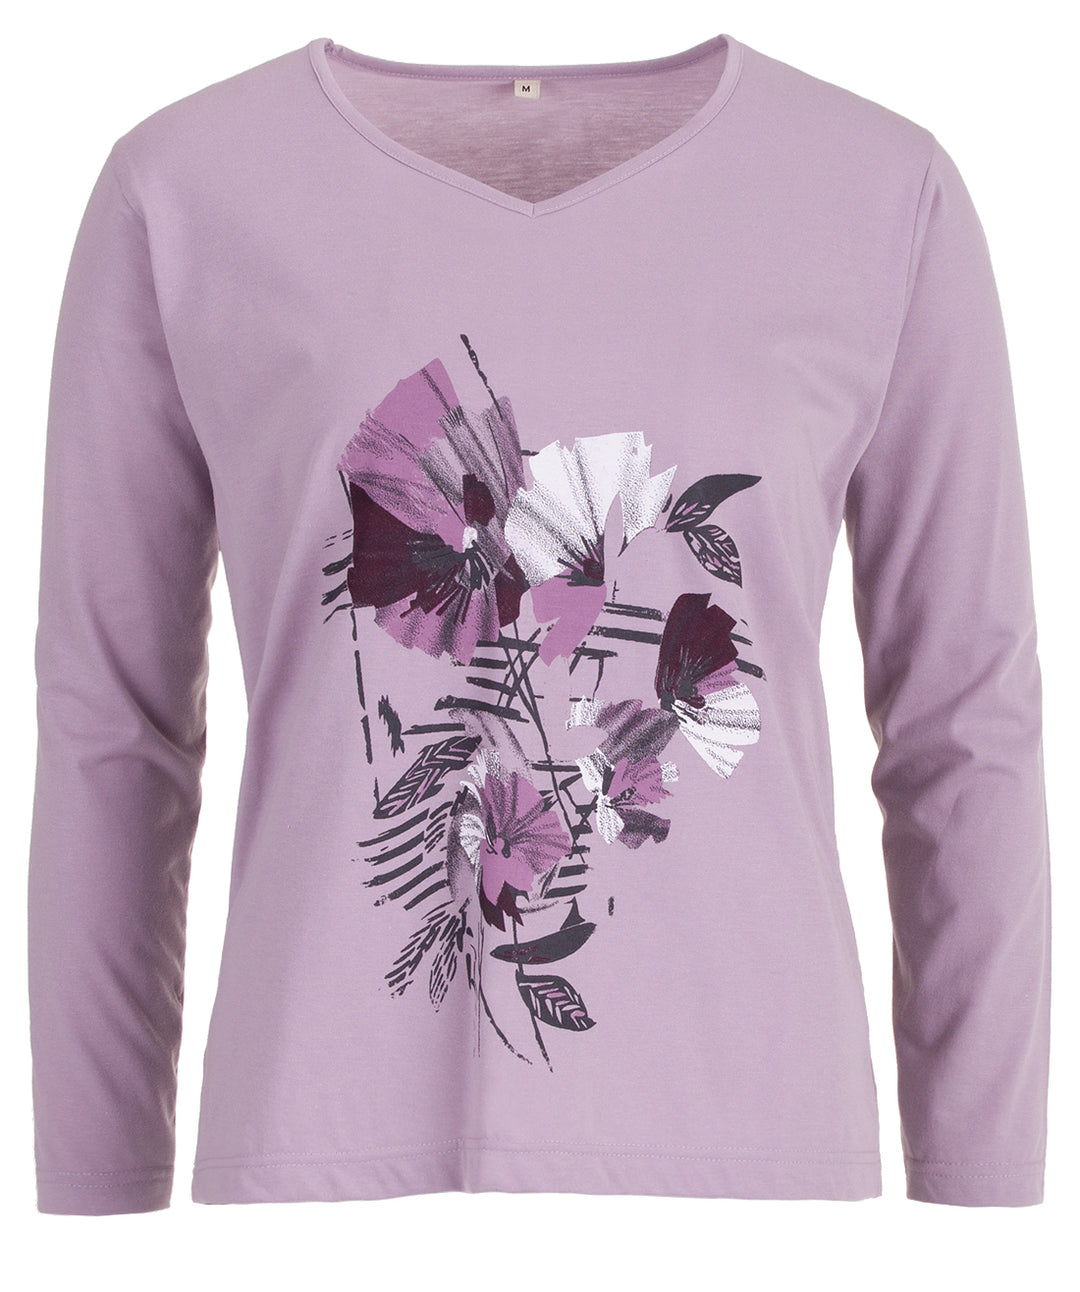 Long sleeve shirt - floral print